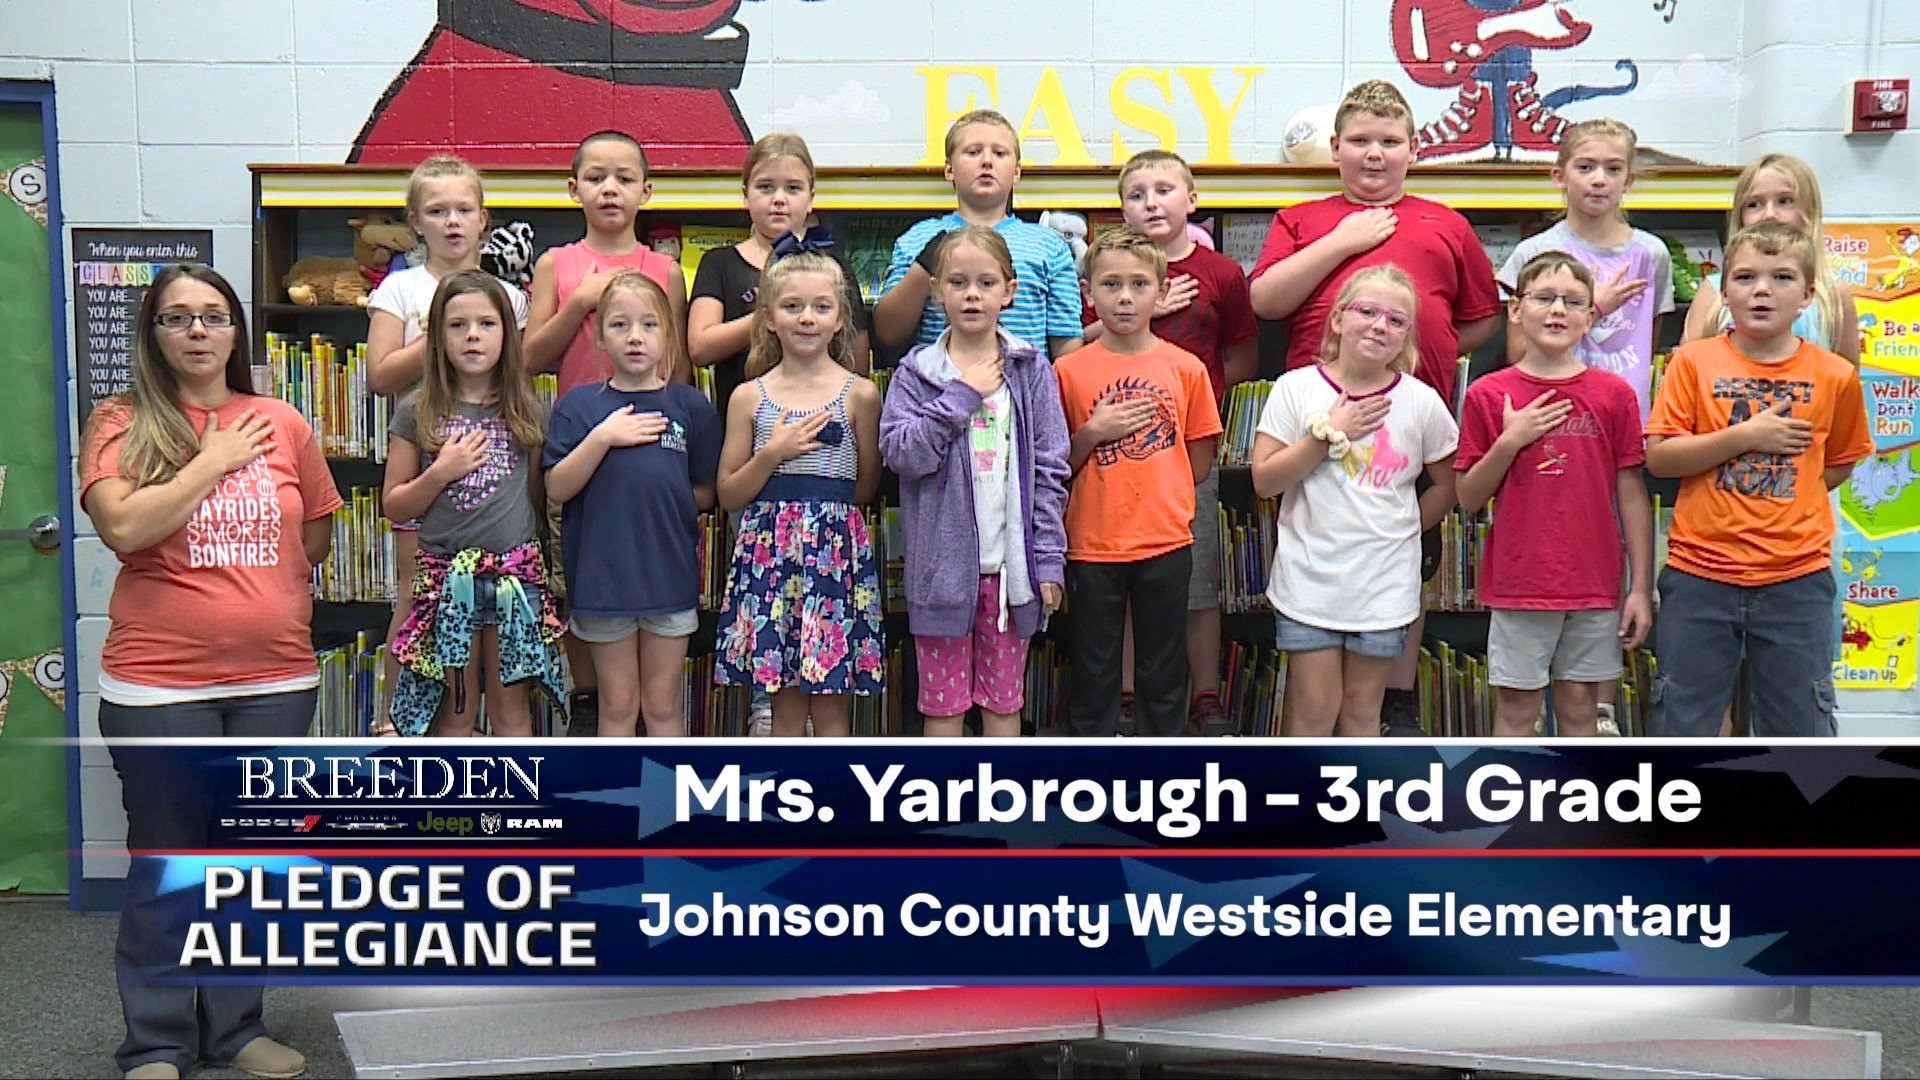 Mrs. Yarbrough  3rd Grade Johnson County Westside Elementary